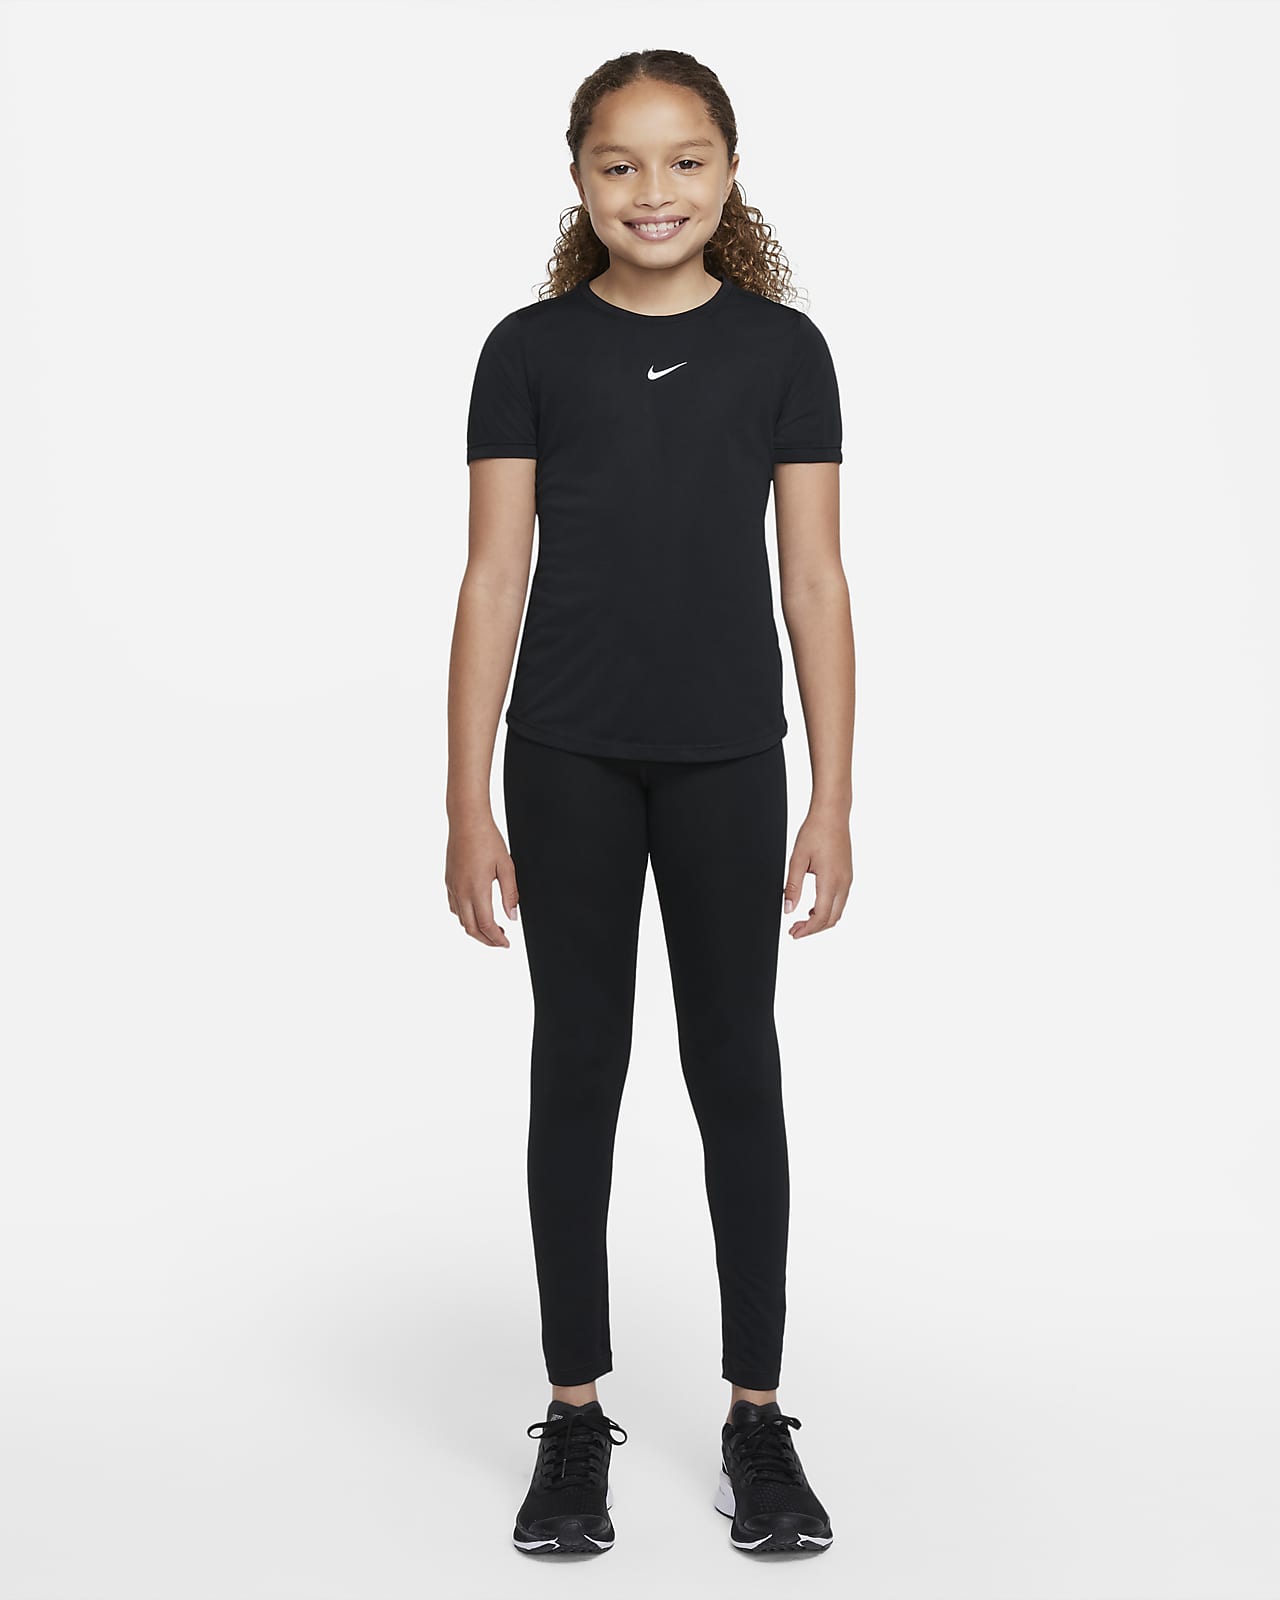 Fruta vegetales si puedes Provisional Nike Dri-FIT One Camiseta de manga corta - Niña. Nike ES